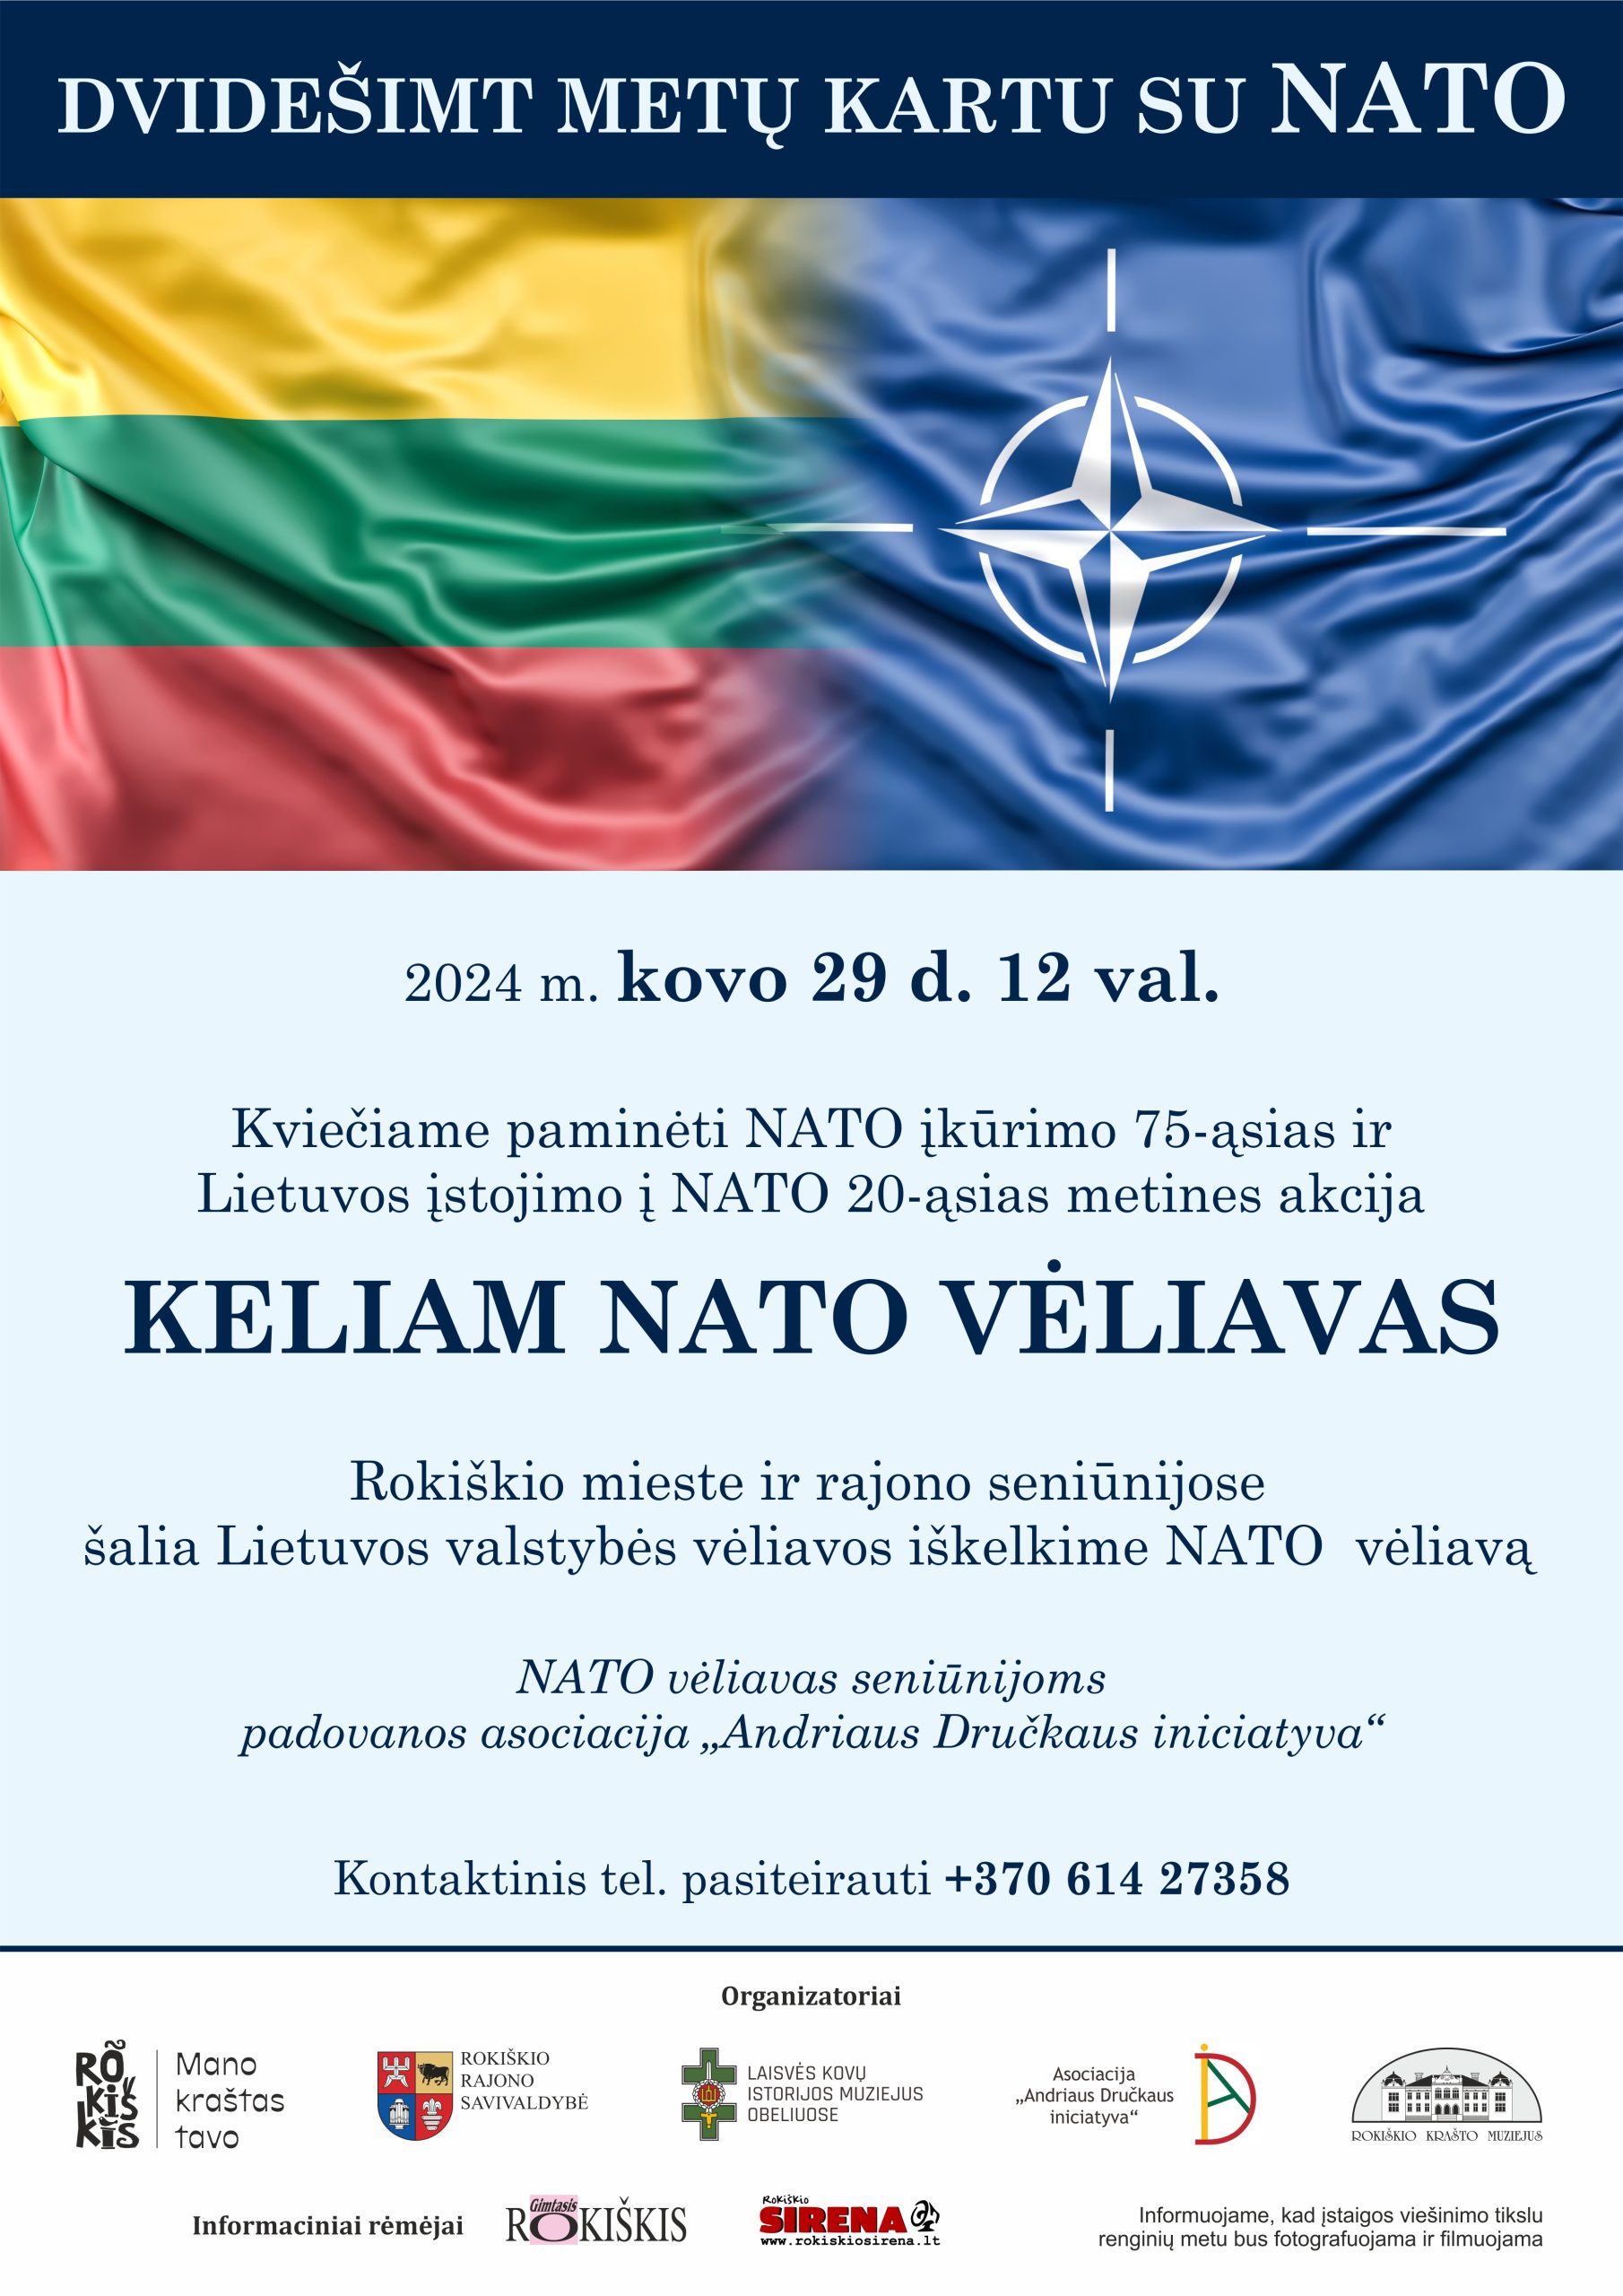 DVIDEŠIMT METŲ KARTU SU NATO!